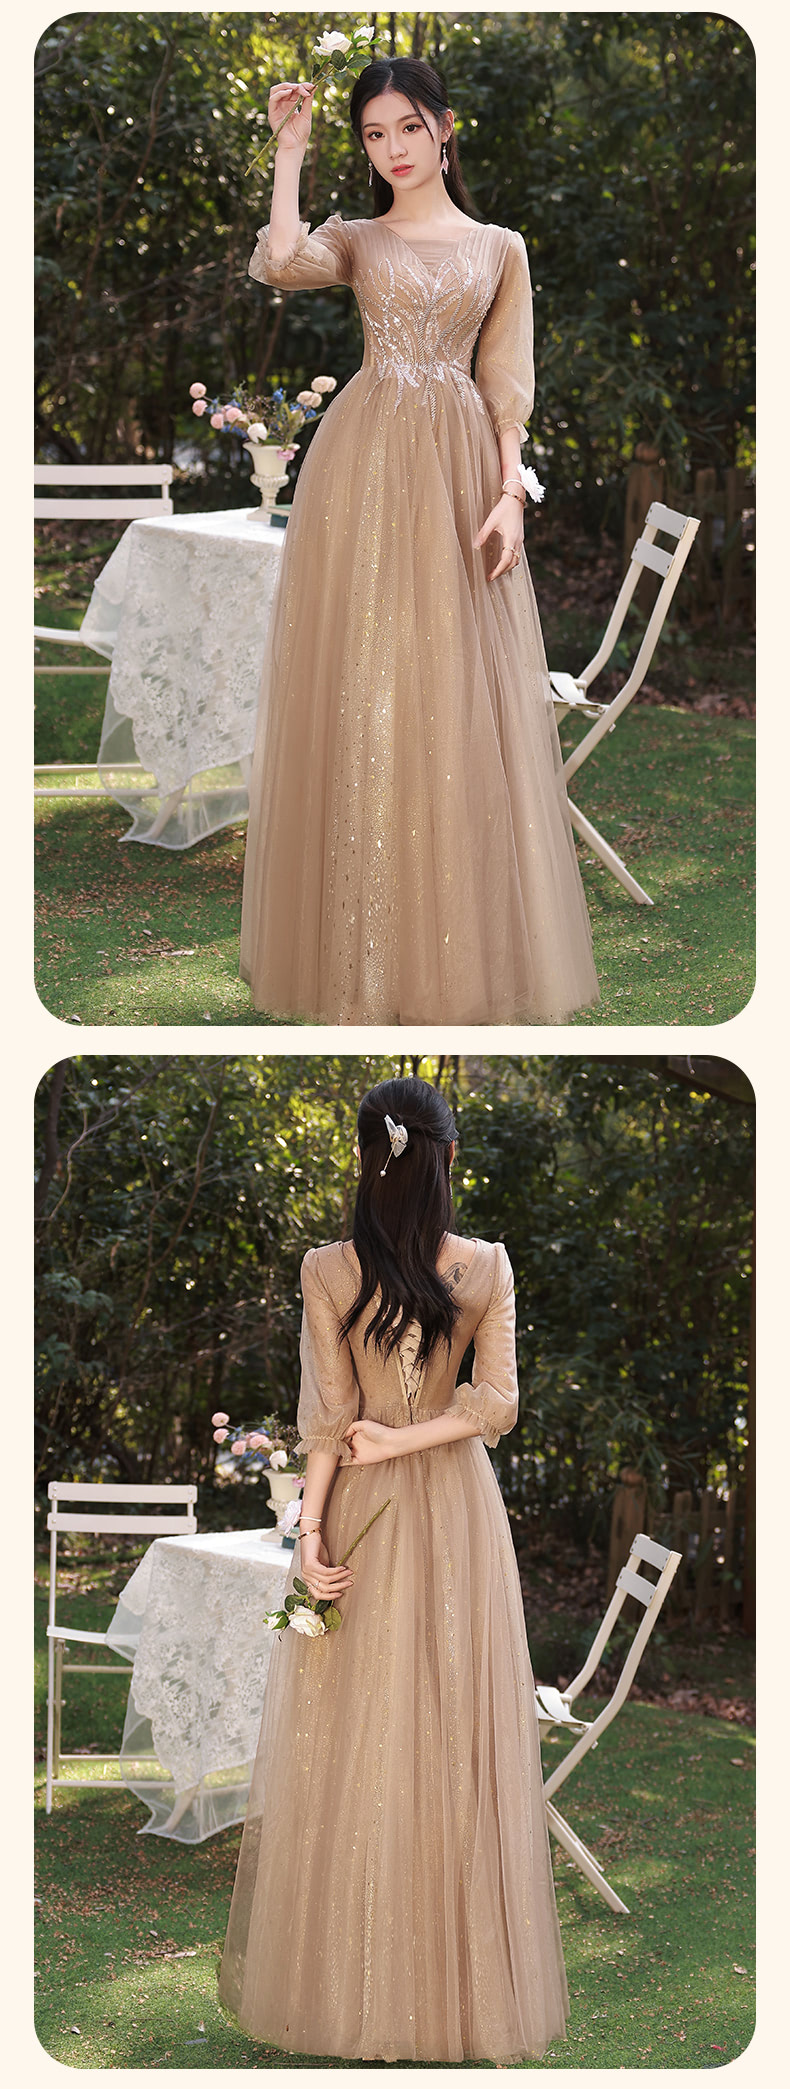 Chiffon-Floor-Length-Bridesmaids-Wedding-Prom-Dress-Ball-Gown21.jpg